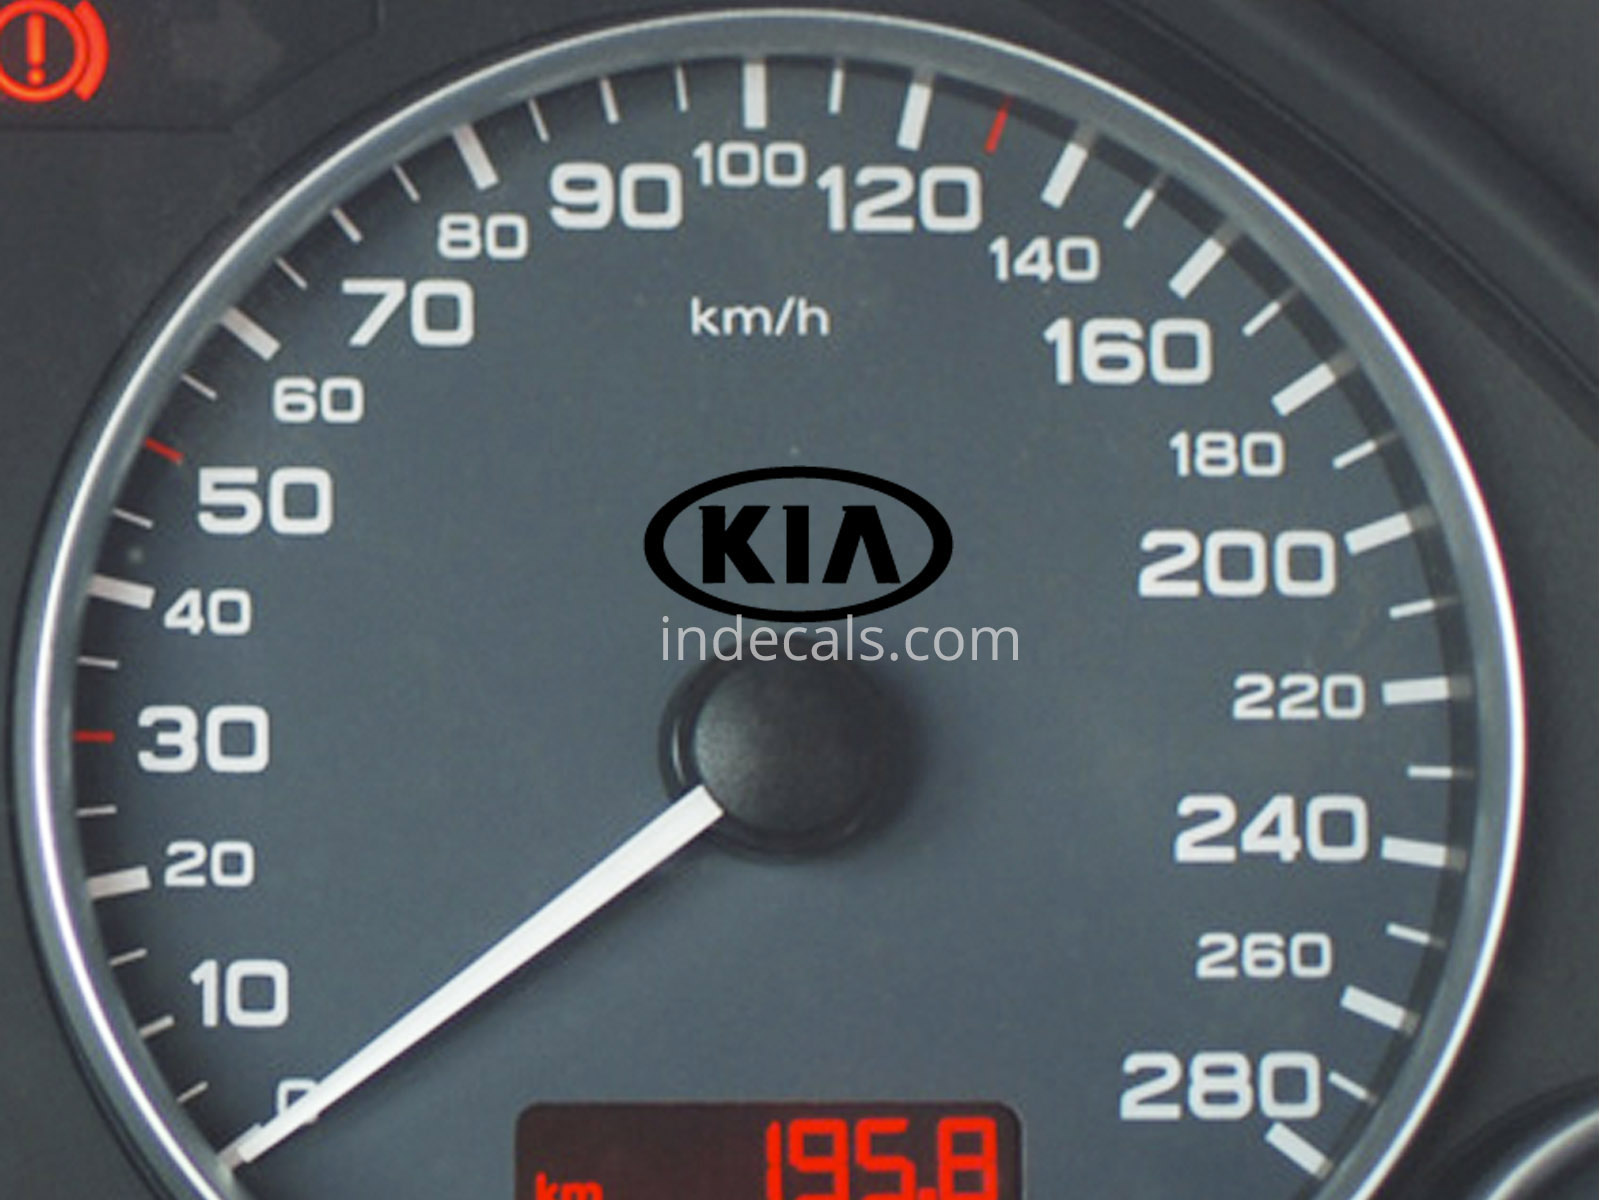 3 x KIA Stickers for Speedometer - Black